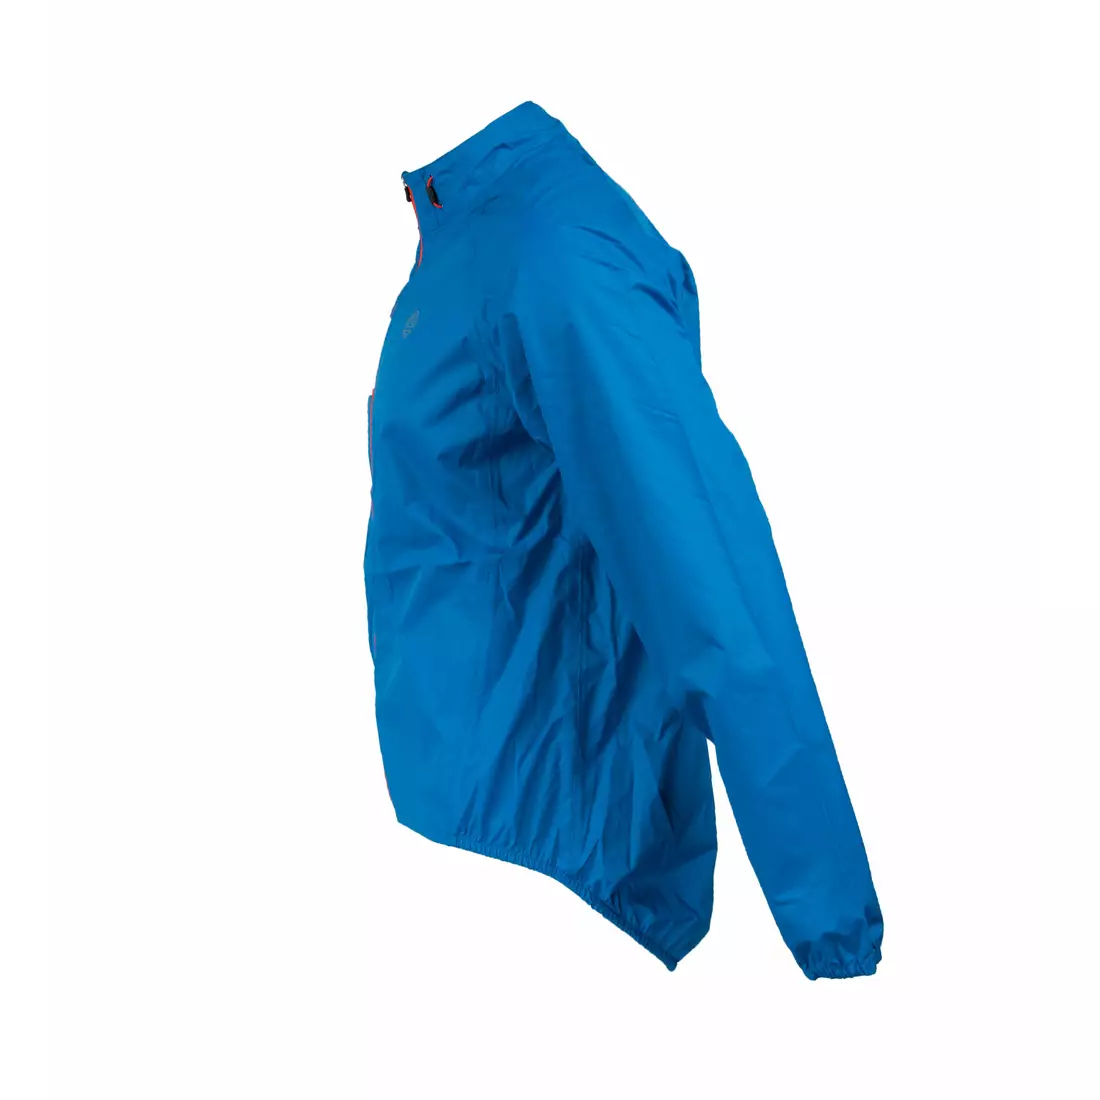 DARE2B AFFUSION JACKET - light rainproof jacket for cycling, blue DMW096-9PR